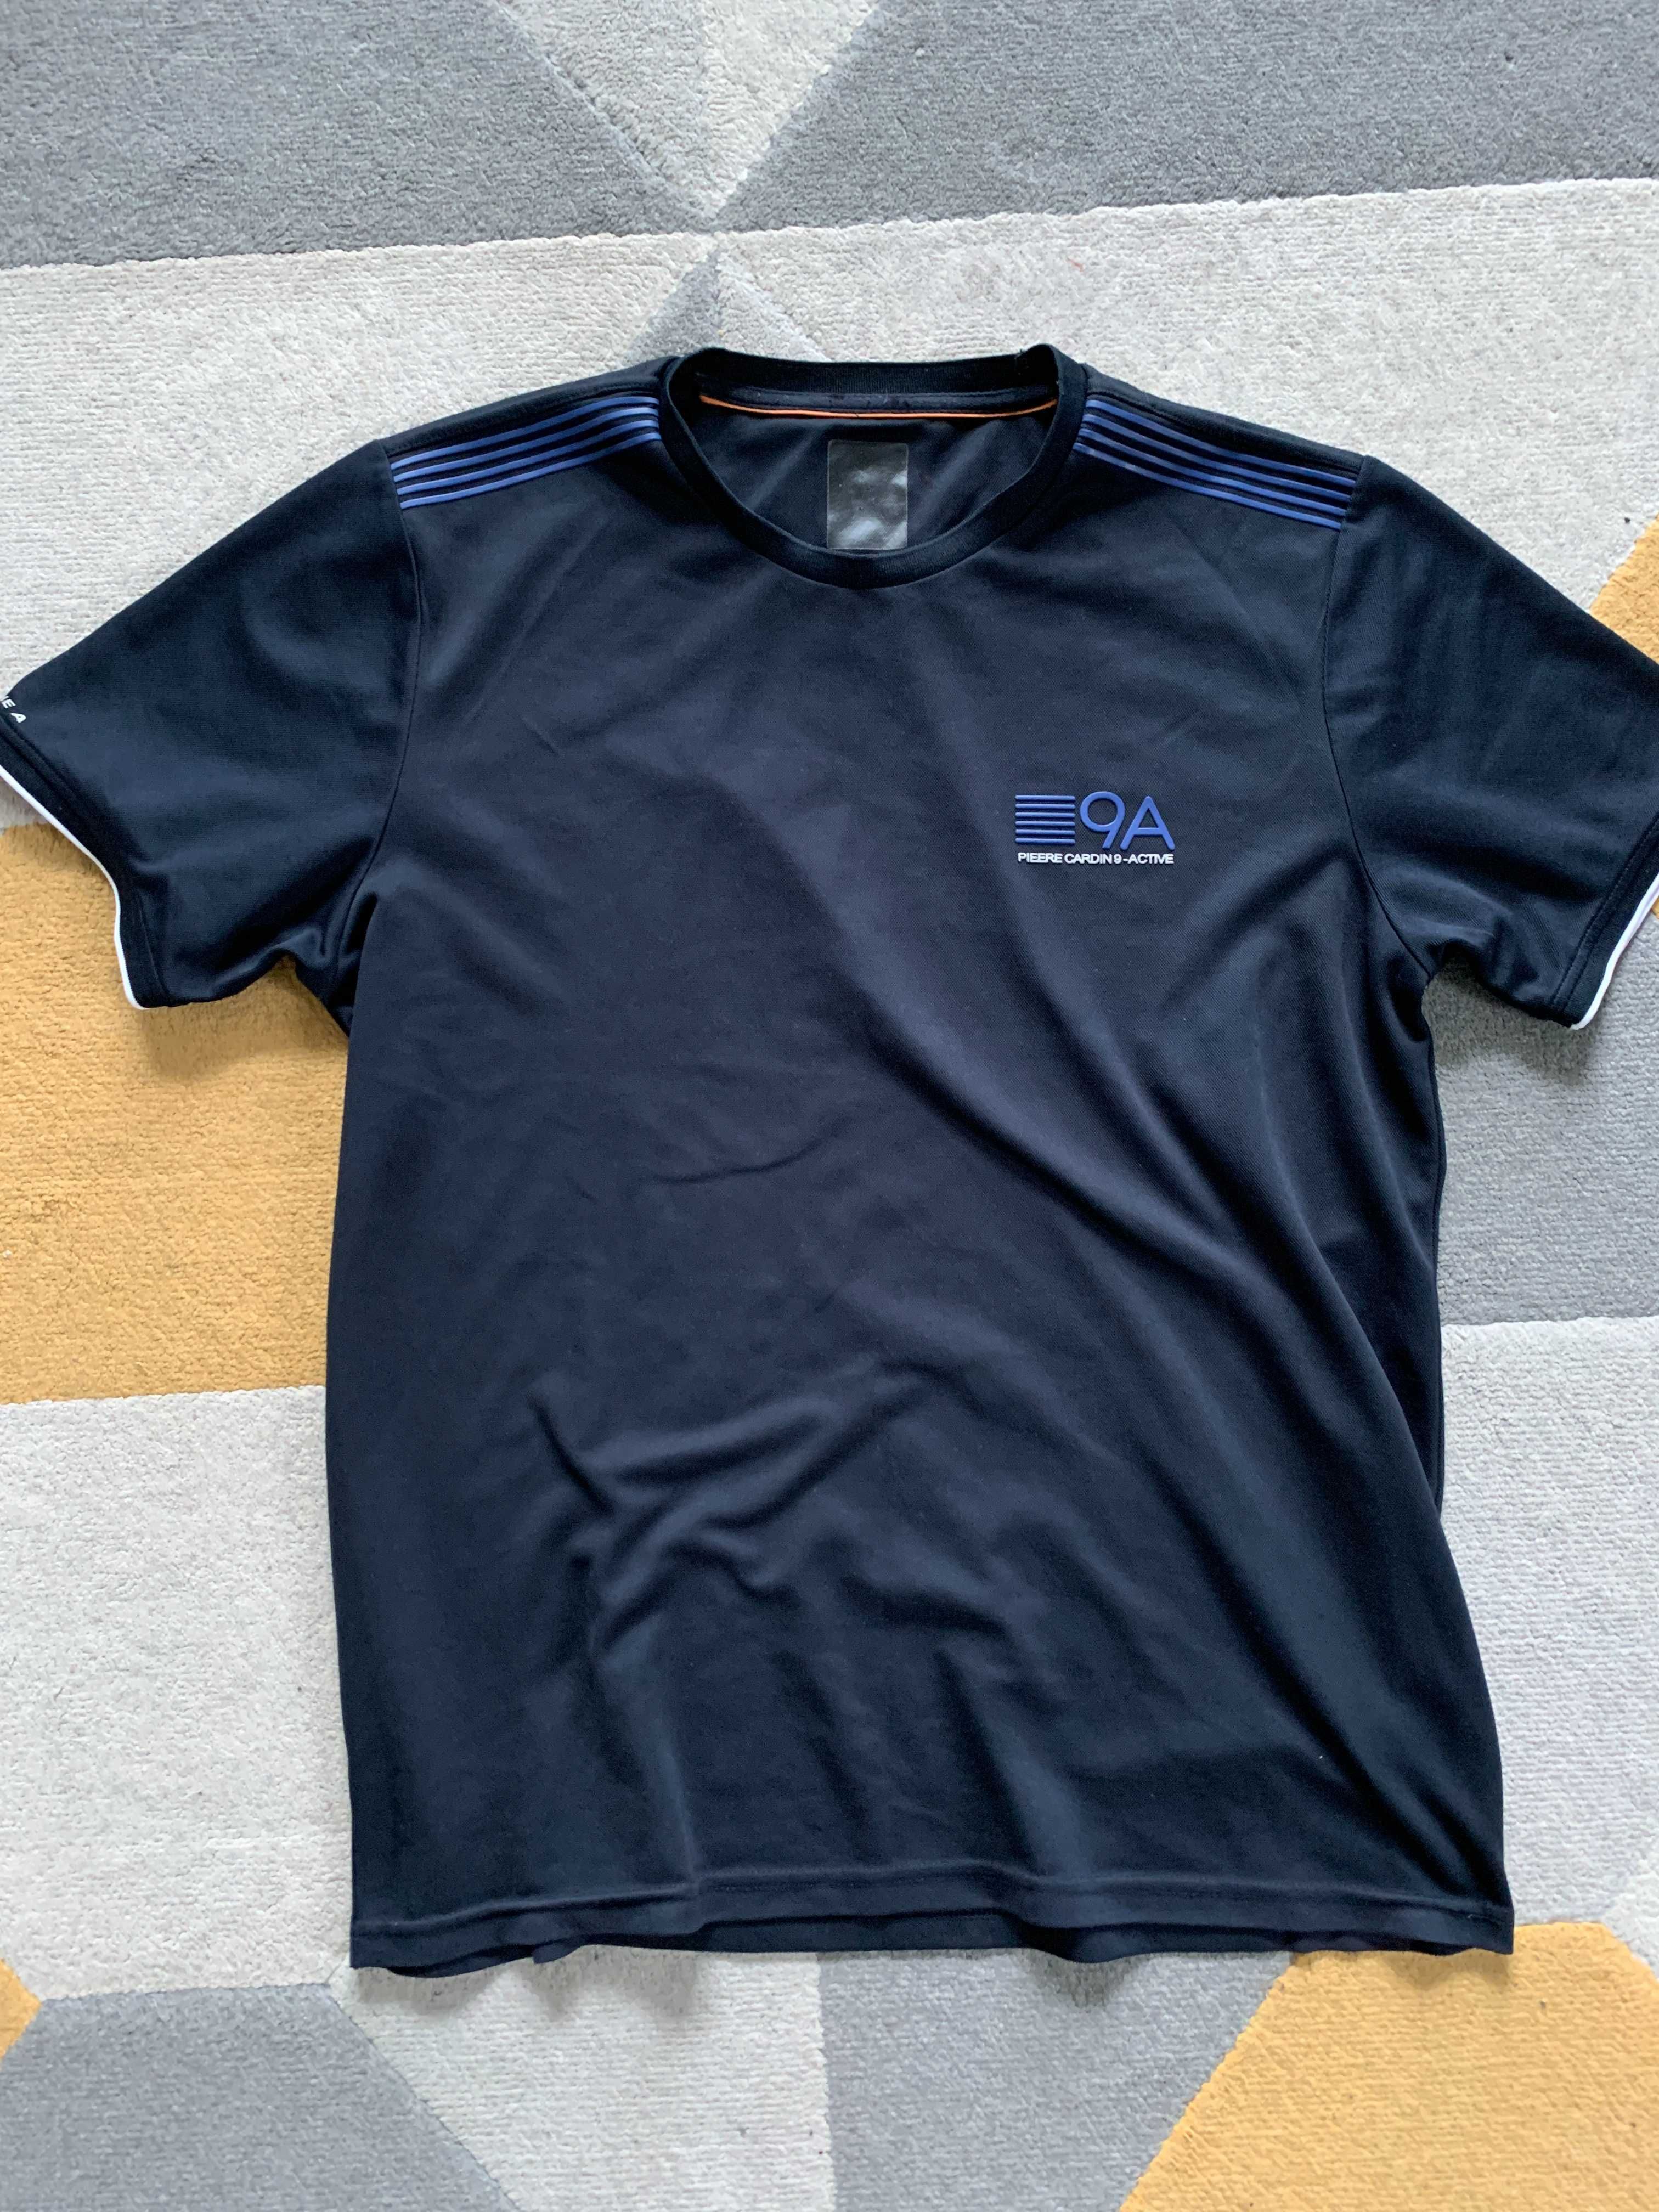 Pierre Cardin koszulka sportowa t-shirt Active XL